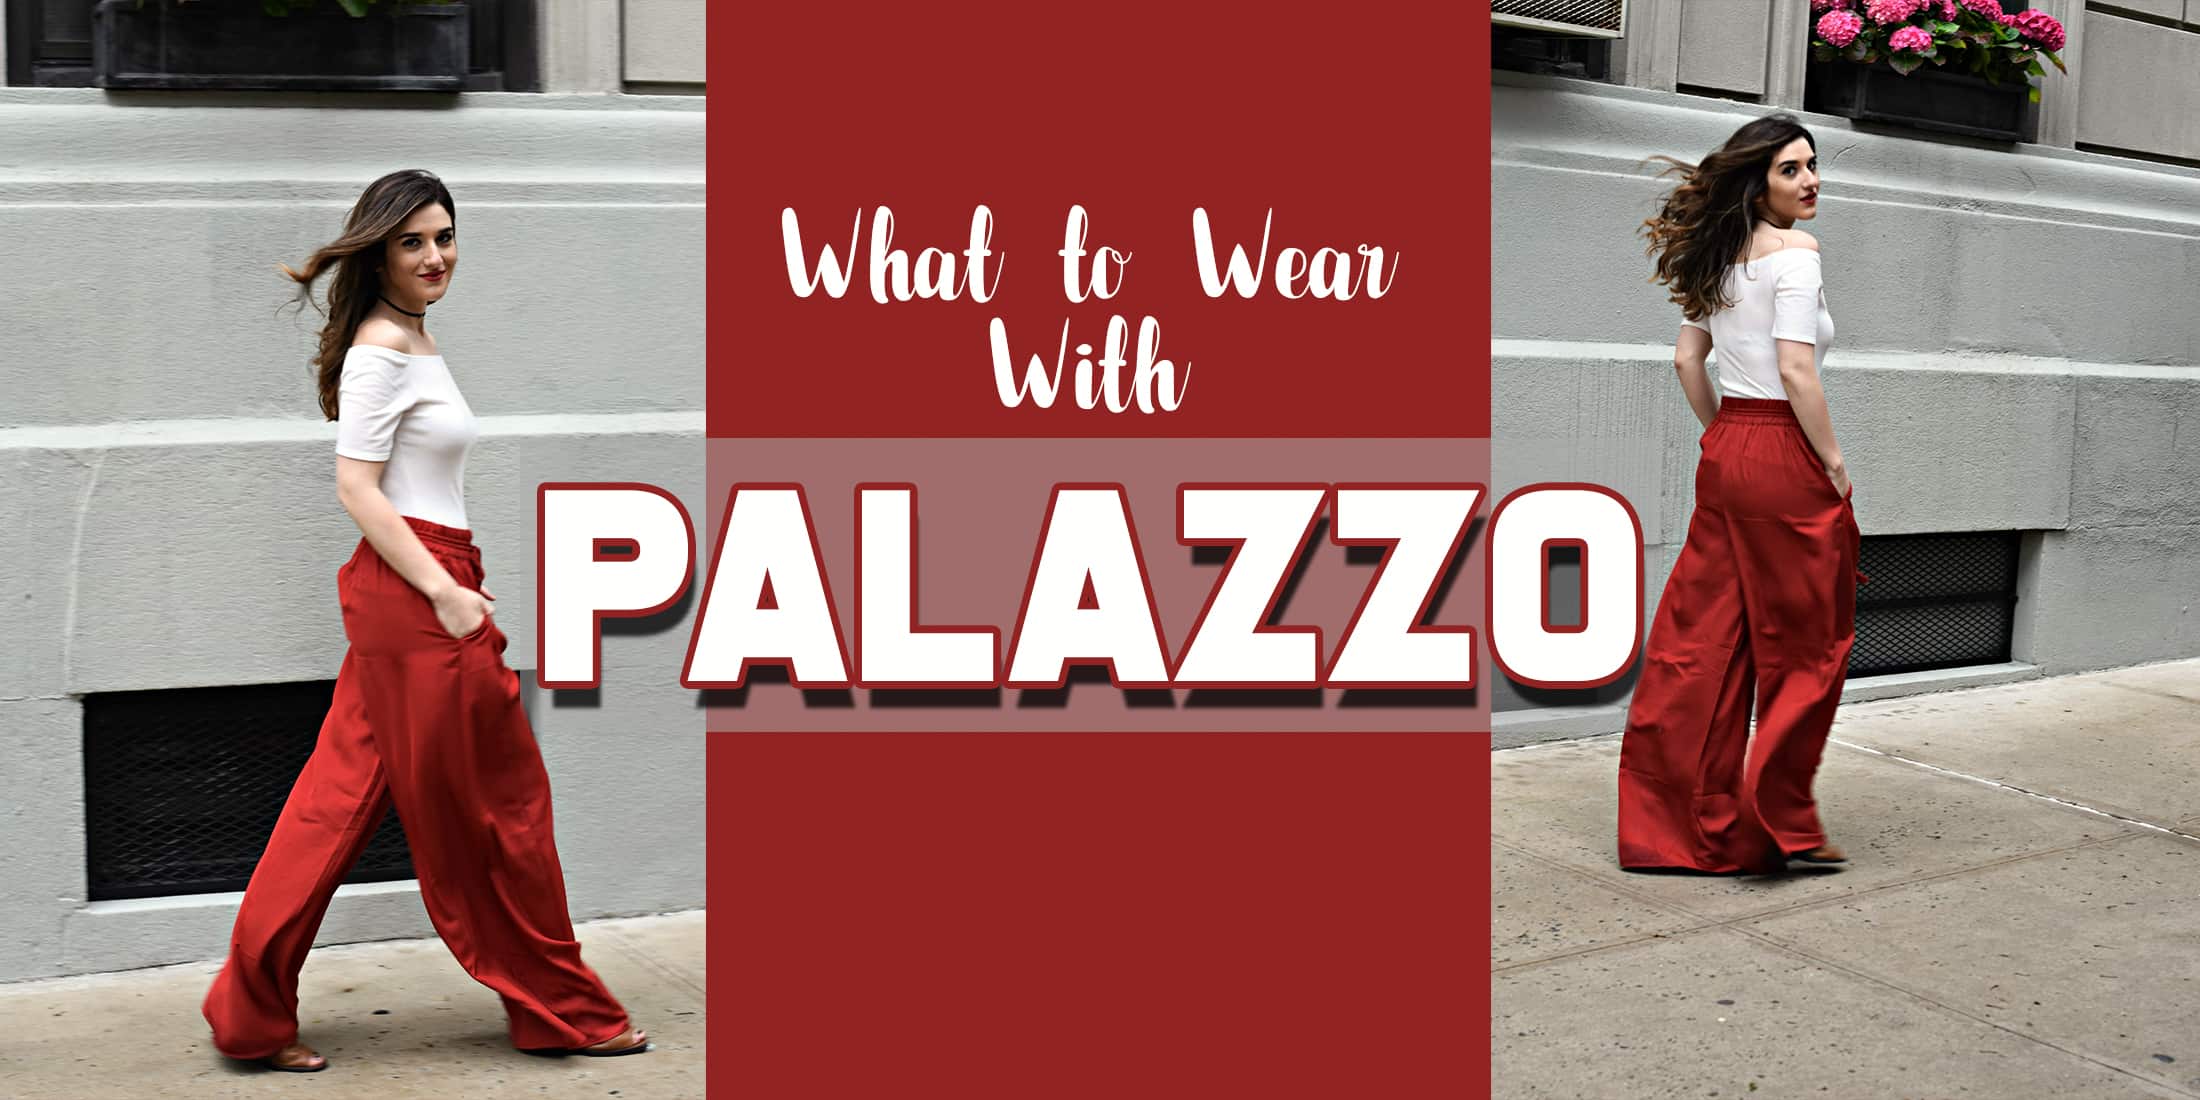 Most fashionable ways to wear palazzo pants